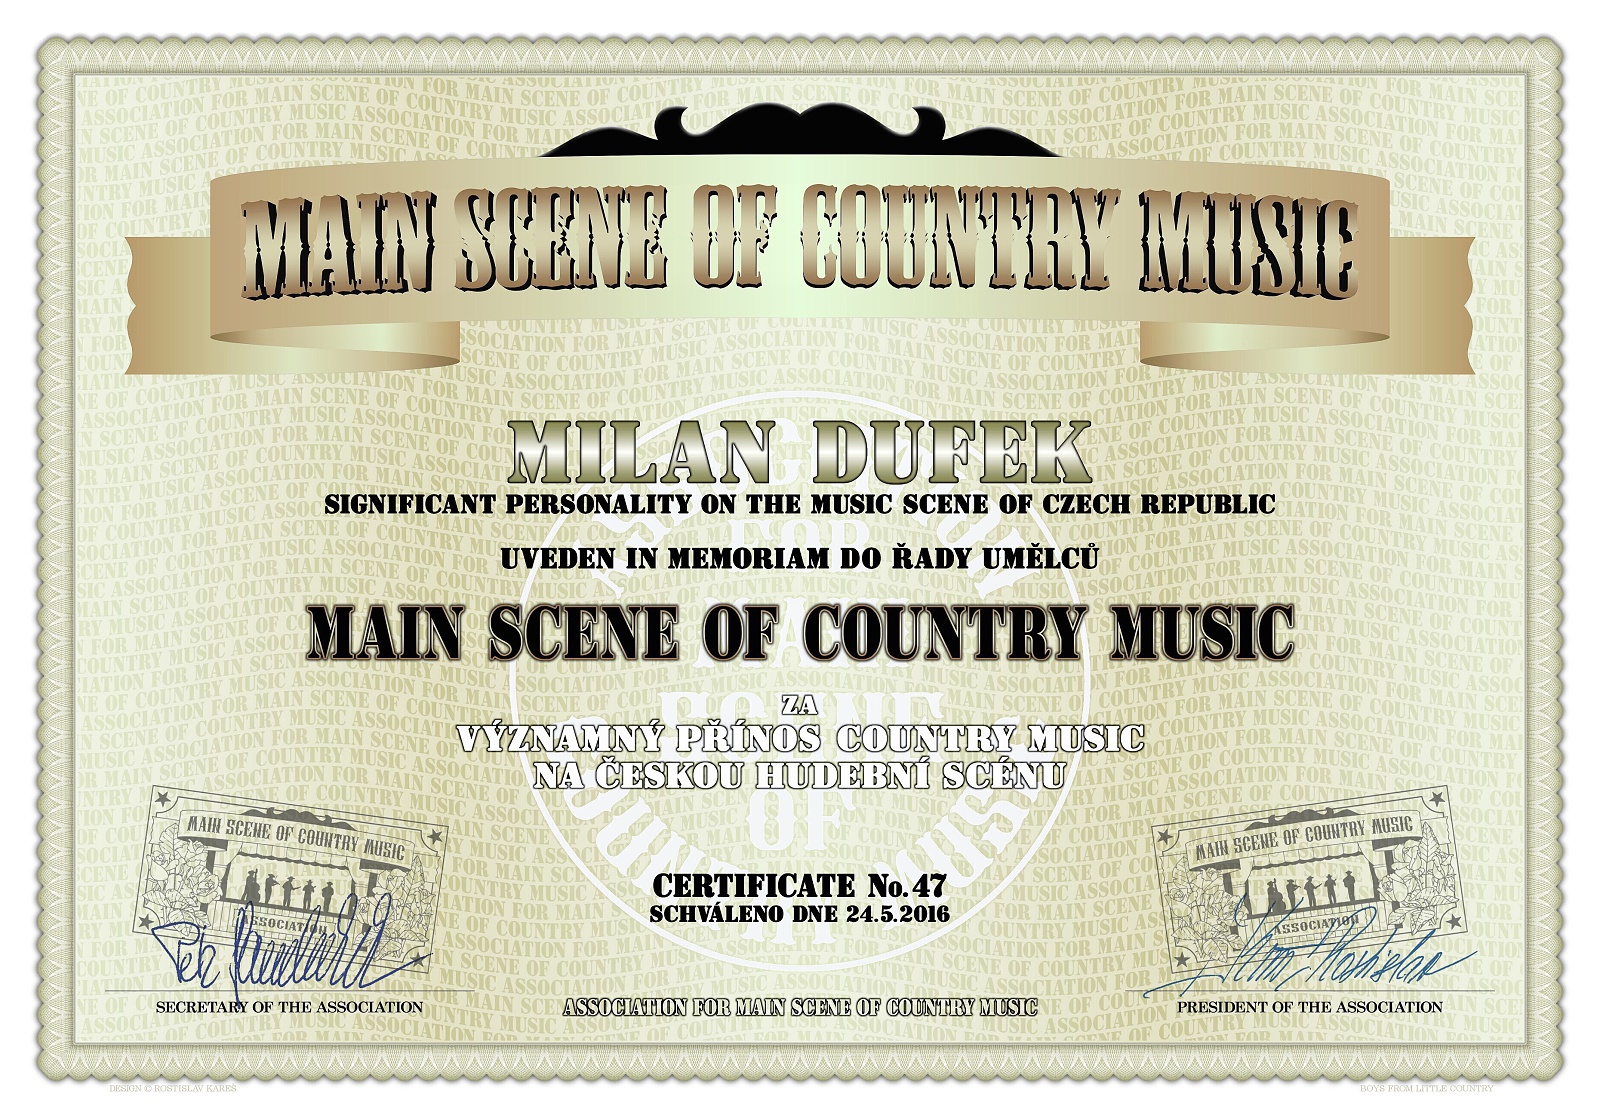 CE 47 - Main Scene of Country Music